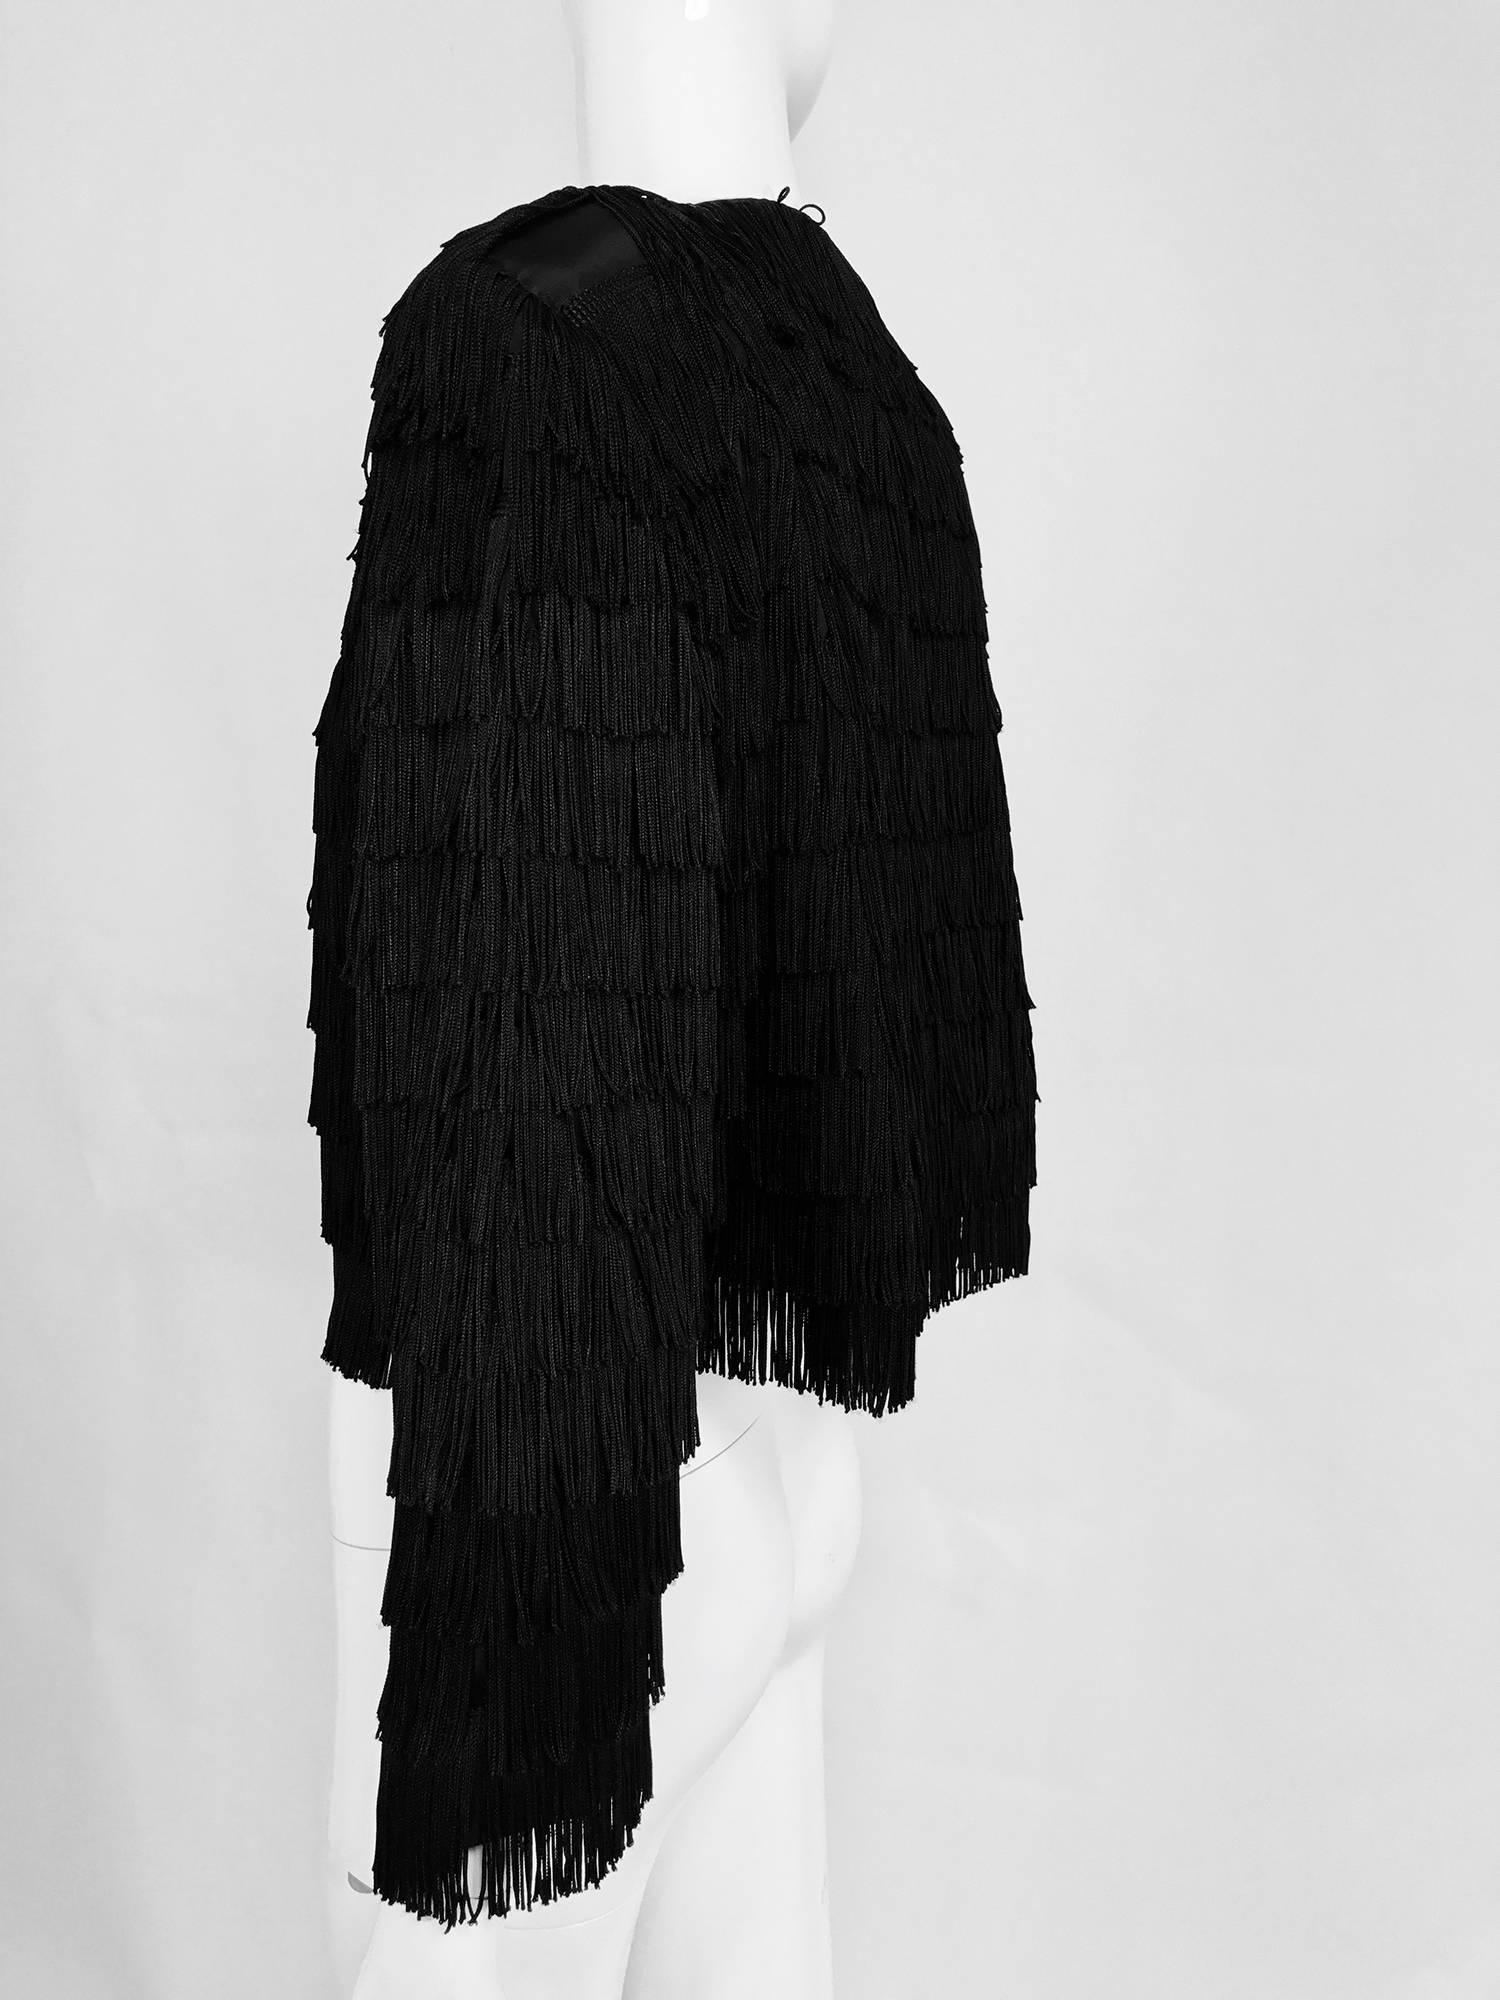 Women's Dramatic Black crepe totally fringed jacket 1980s